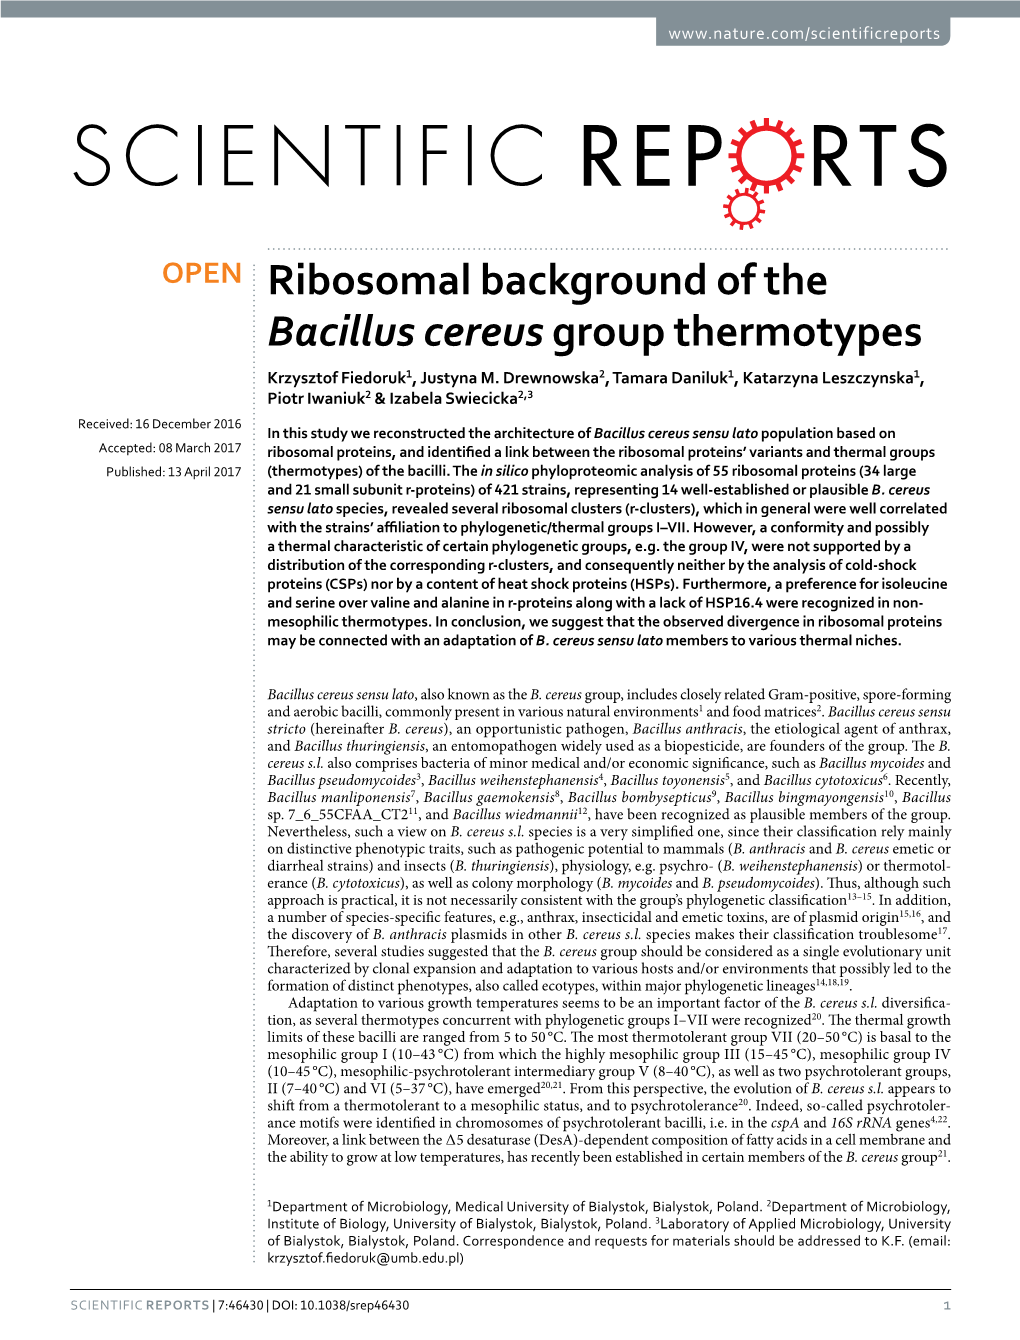 Ribosomal Background of the Bacillus Cereus Group Thermotypes Krzysztof Fiedoruk1, Justyna M